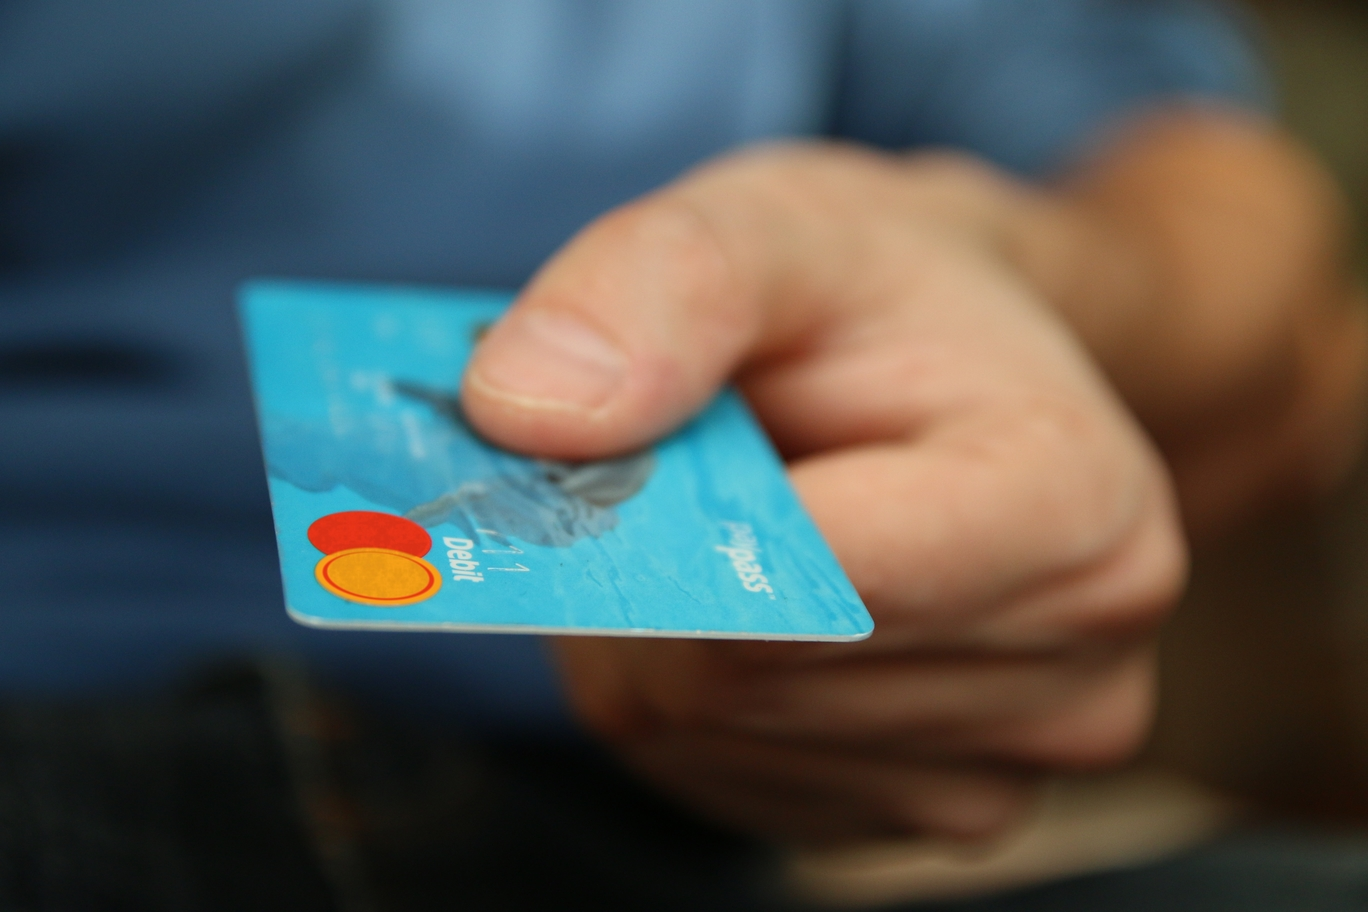 Man holding bank card